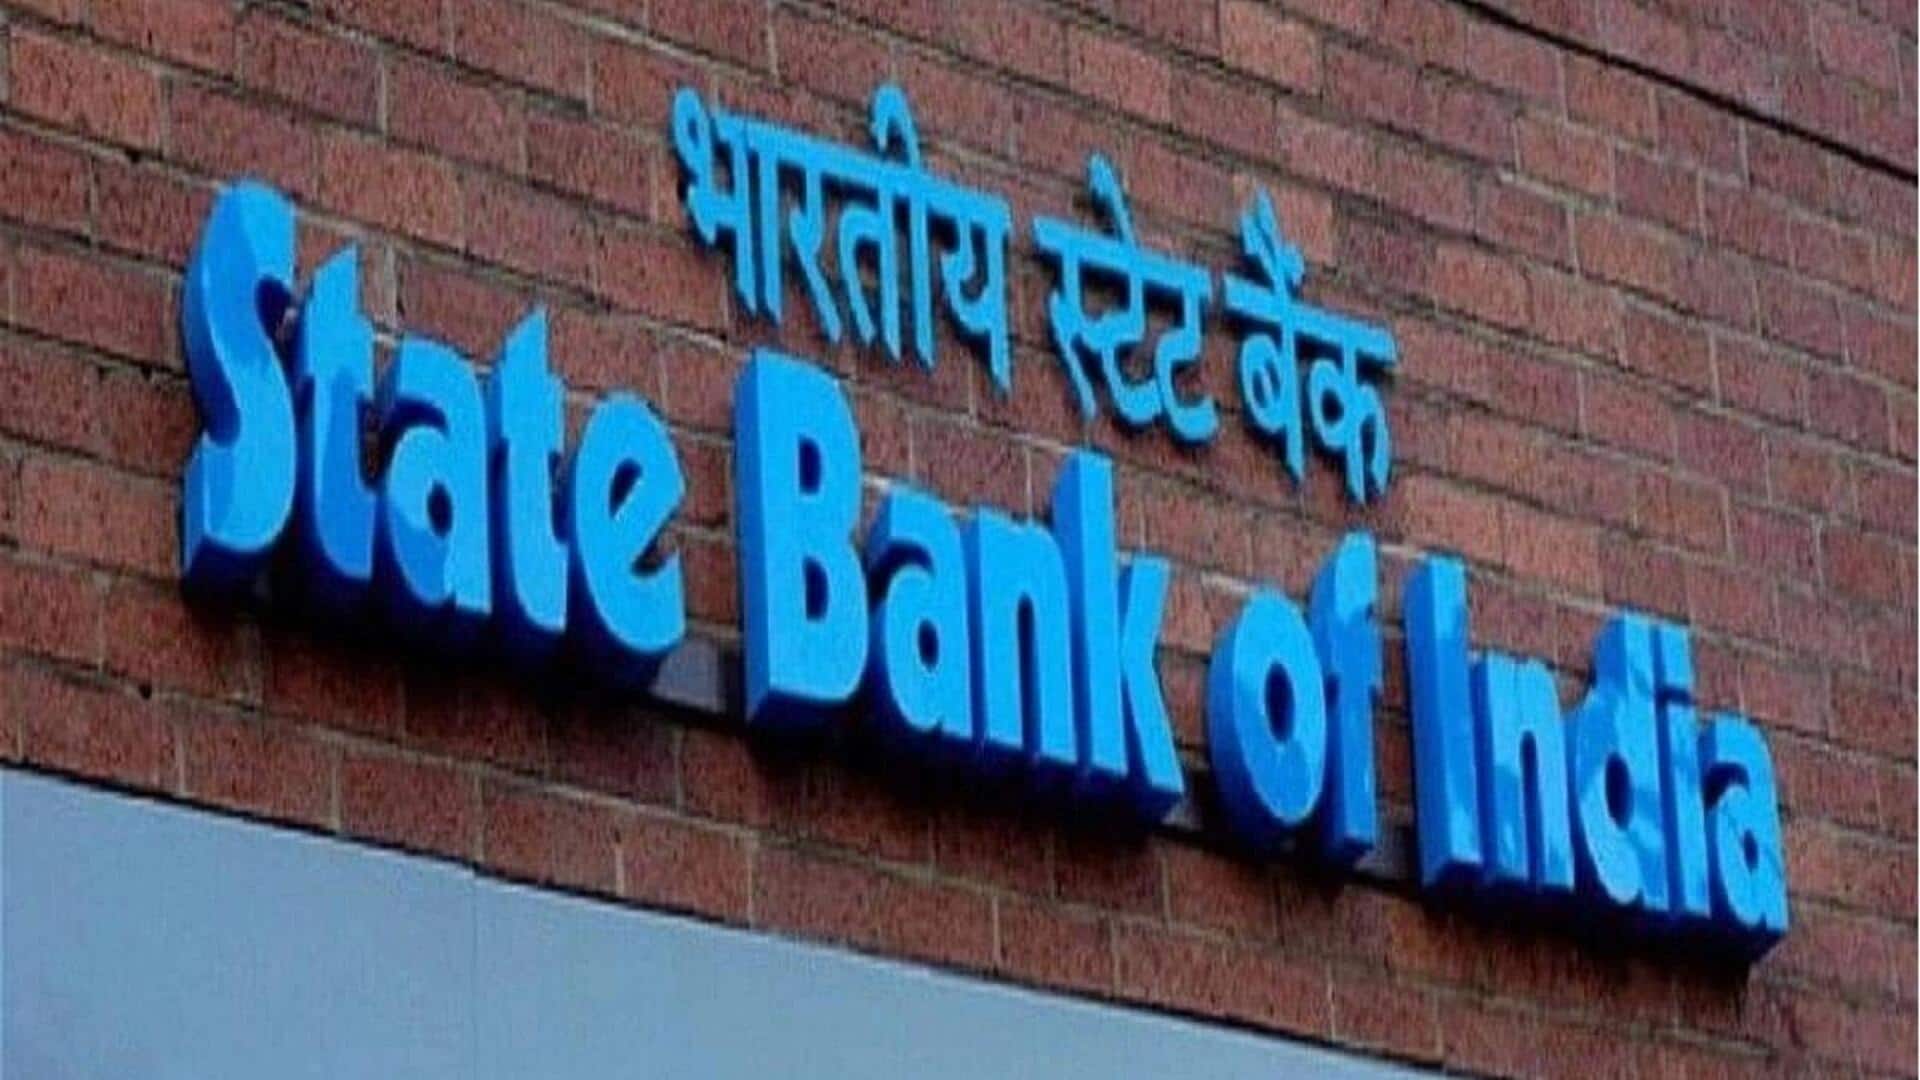 SBI raises Rs. 10,000 crore via 15-year tier 2 bonds